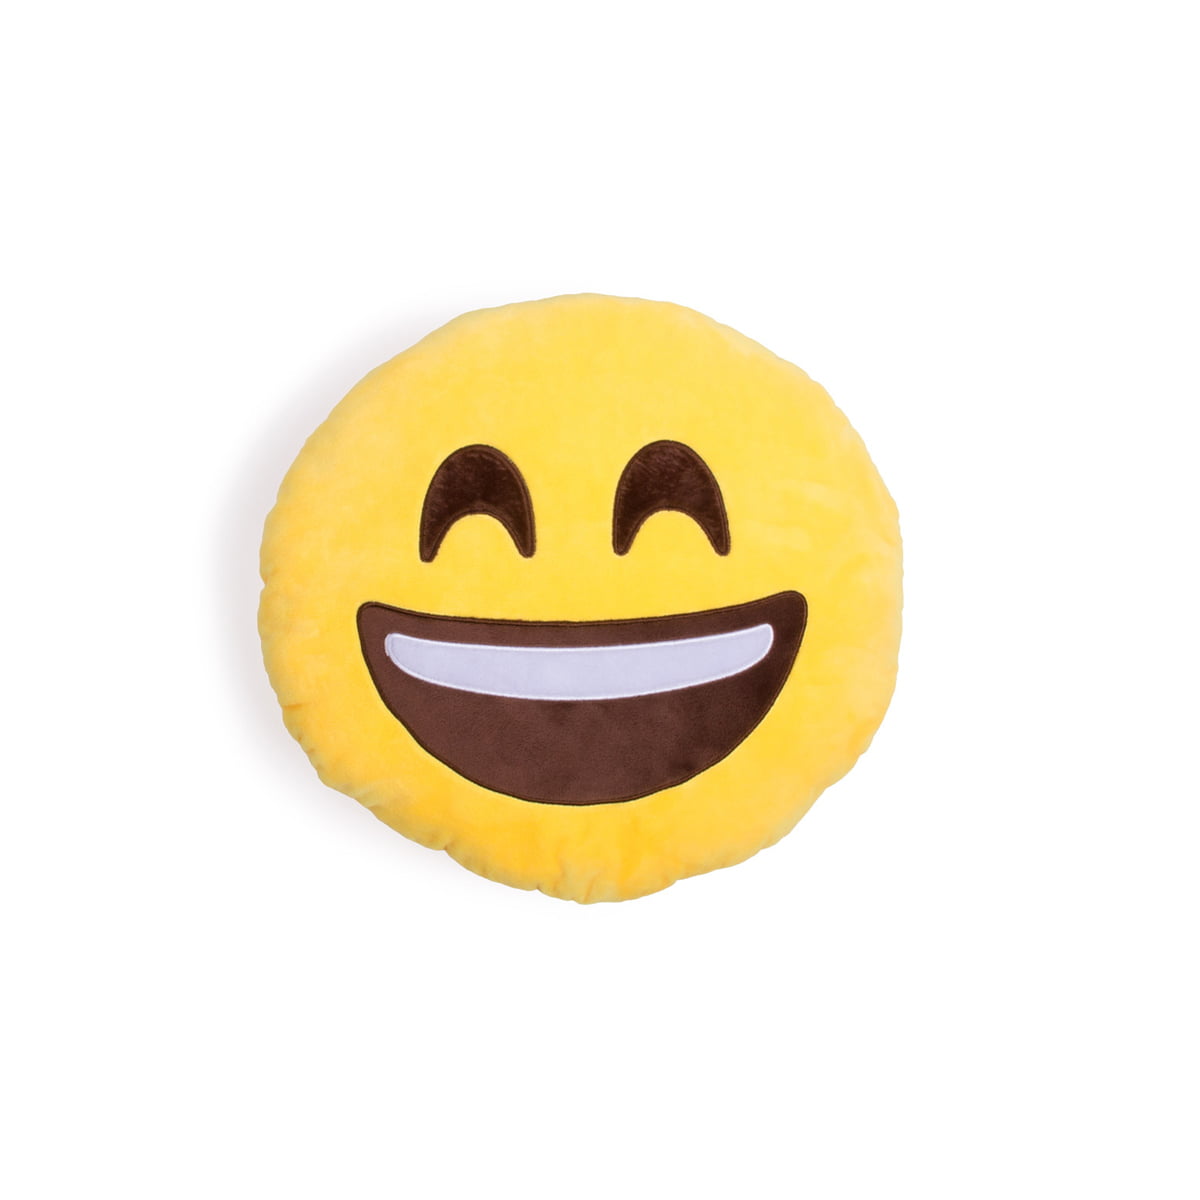 USA SELLER Emoji Pillow 12" Inch Large Yellow Smile 30cm Emoticon Giggle/Hunger 